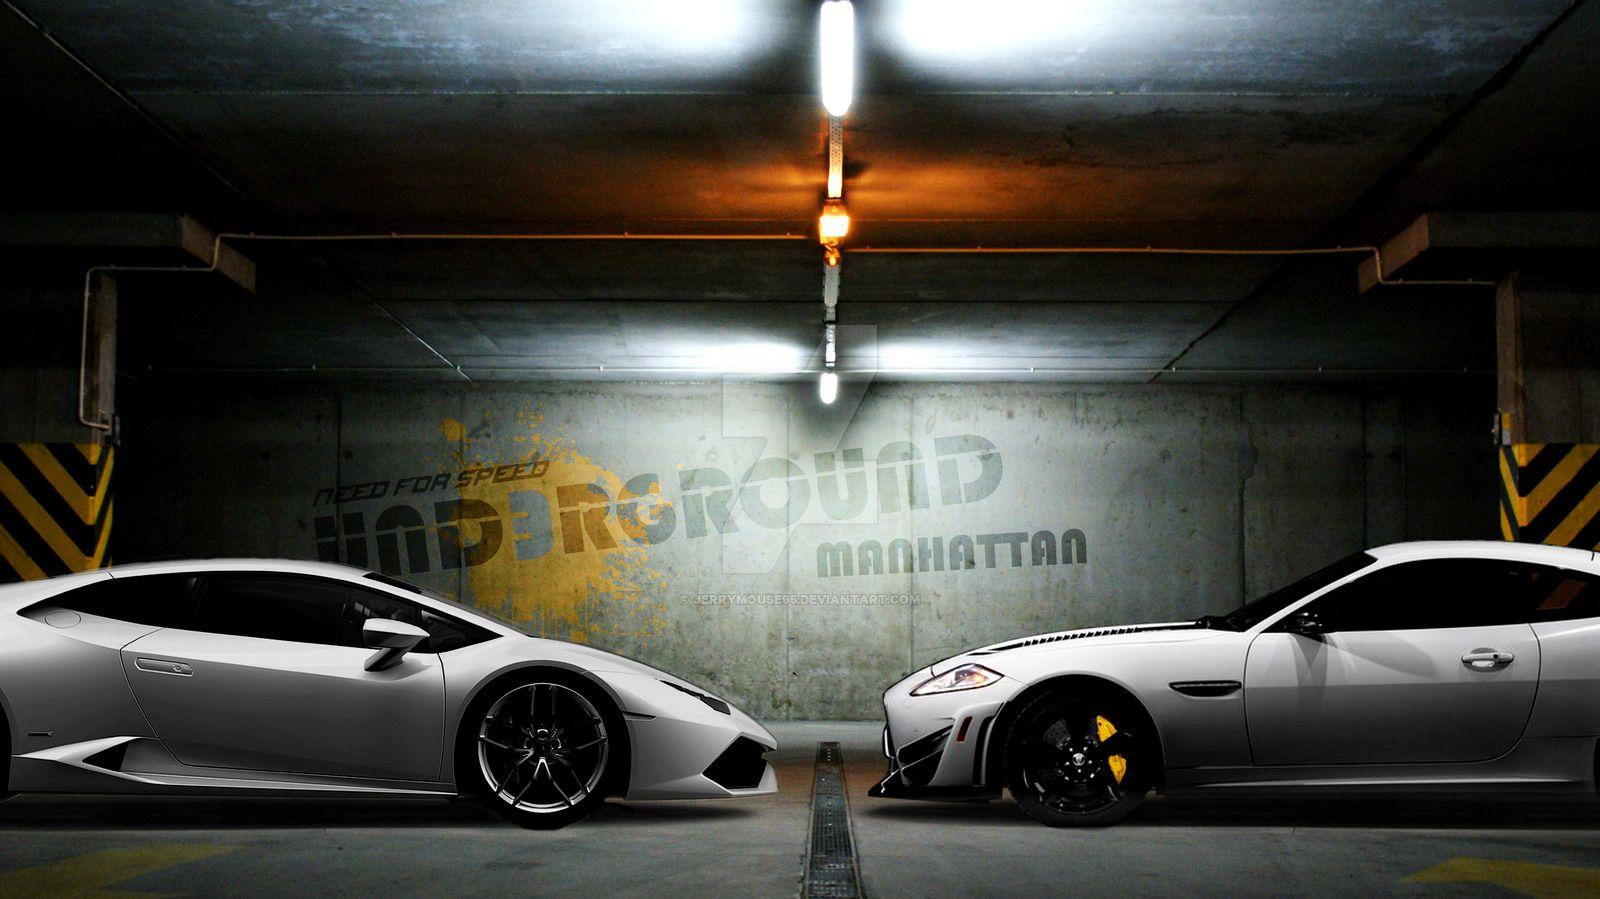 Need for Speed Underground 3